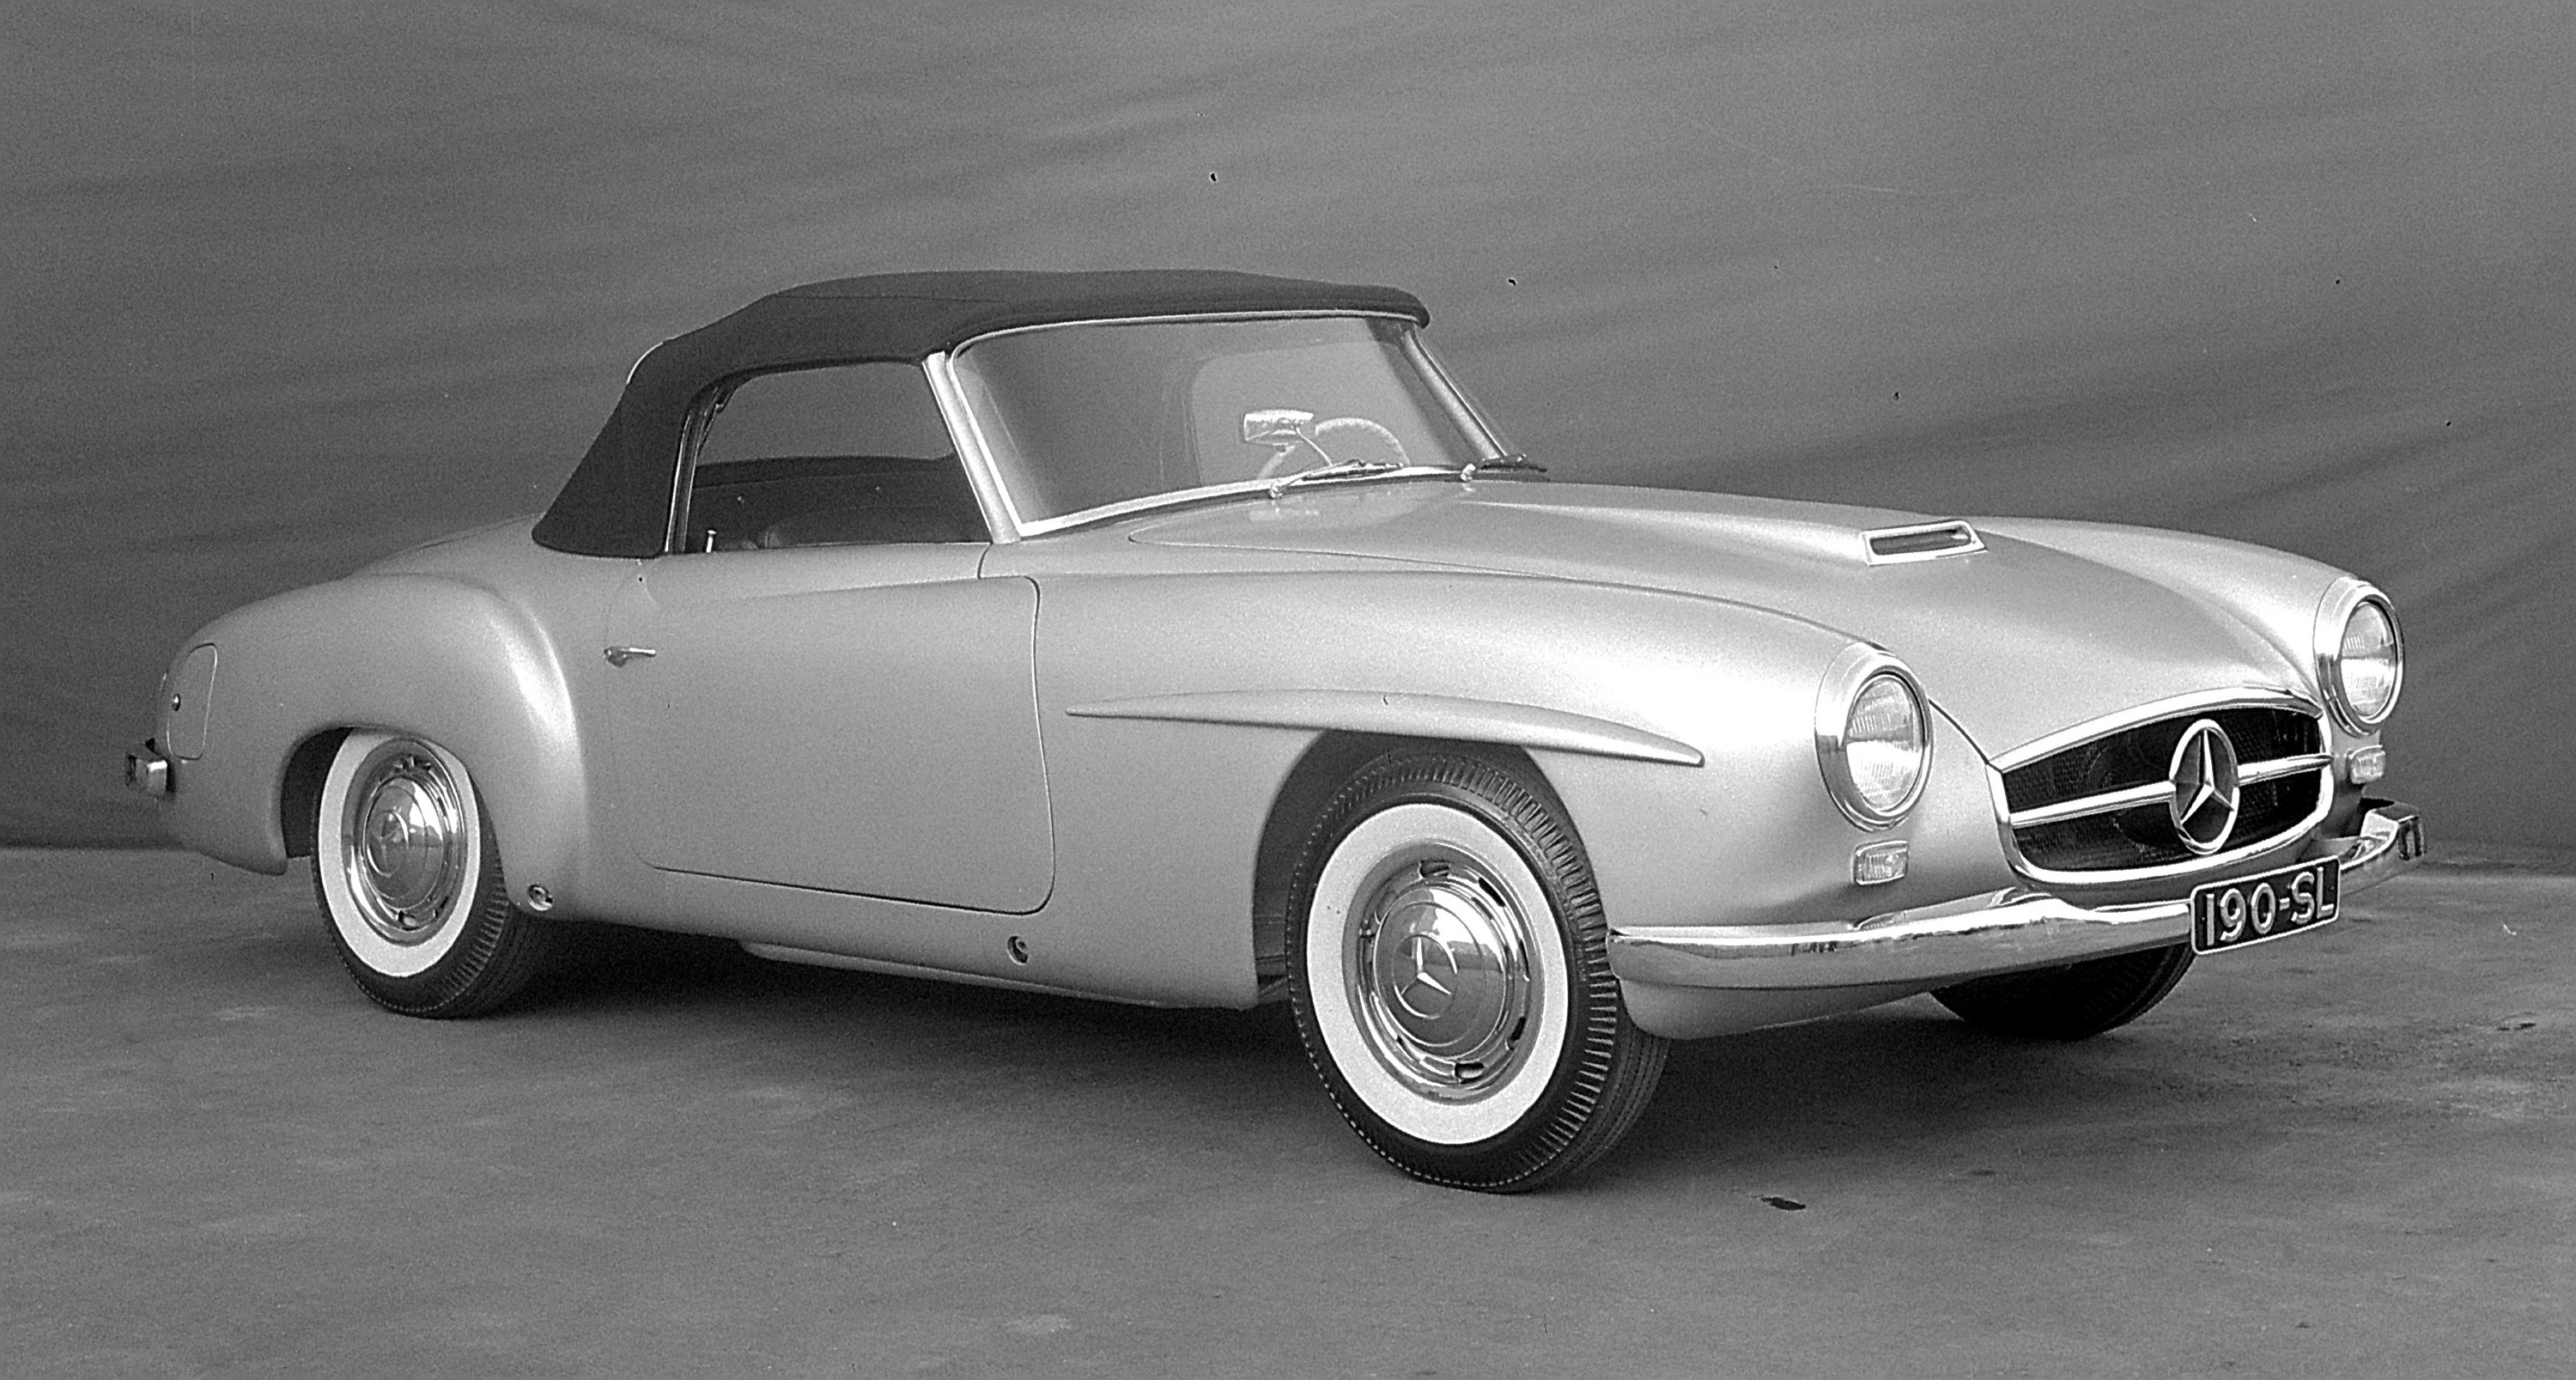 1955 Mercedes-Benz 190 SL Roadster - HD Pictures @ carsinvasion.com